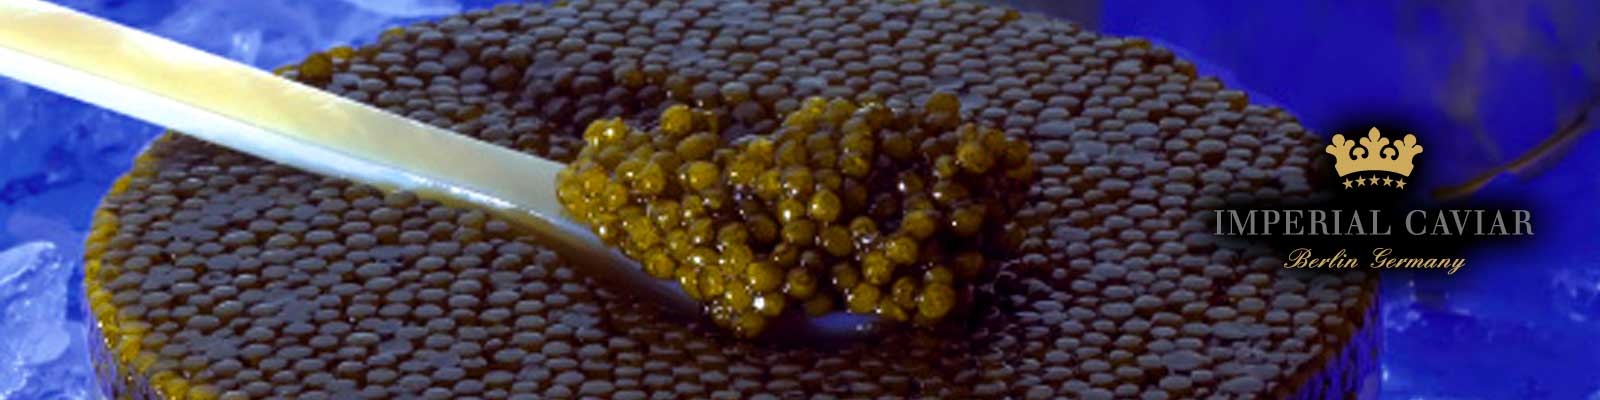 Kaviar ikan sturgeon pilihan kekaisaran Berbagai jenis barang impor segar dari produsen kaviar terbaik diperiksa dengan cermat oleh staf kami yang kompeten sebelum dikemas untuk mengetahui suhu, tampilan, bau, konsistensi dan rasa, serta diklasifikasikan menurut perbedaan terbaik dalam rasa dan nuansa warna. Dengan cara ini, kami menciptakan pilihan yang disukai untuk setiap hidangan gourmet.